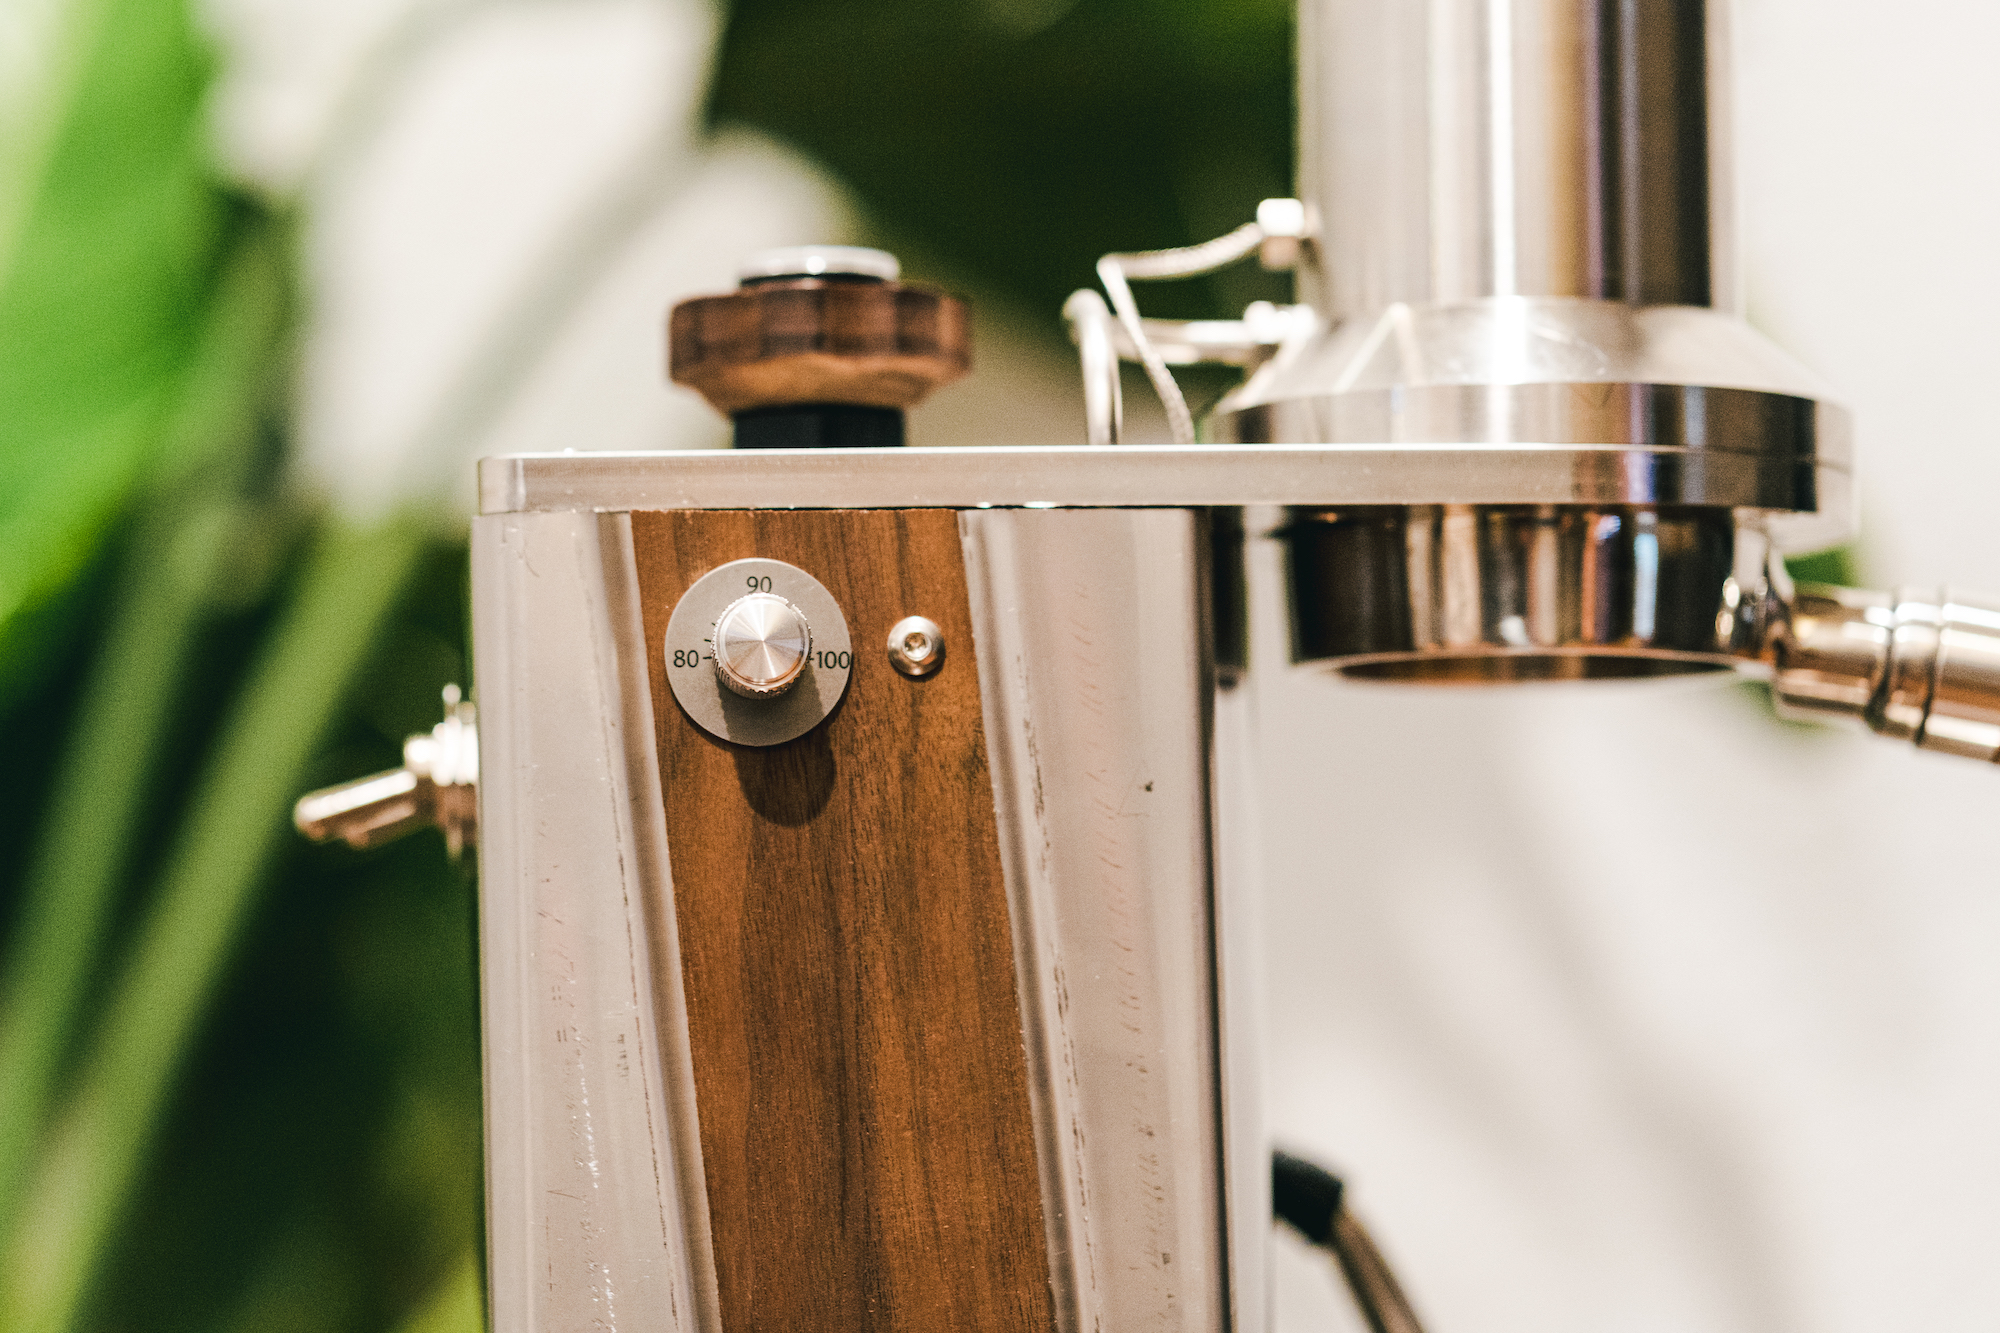 Modern Lever Espresso That Won't Break the Bank: The Argos » CoffeeGeek